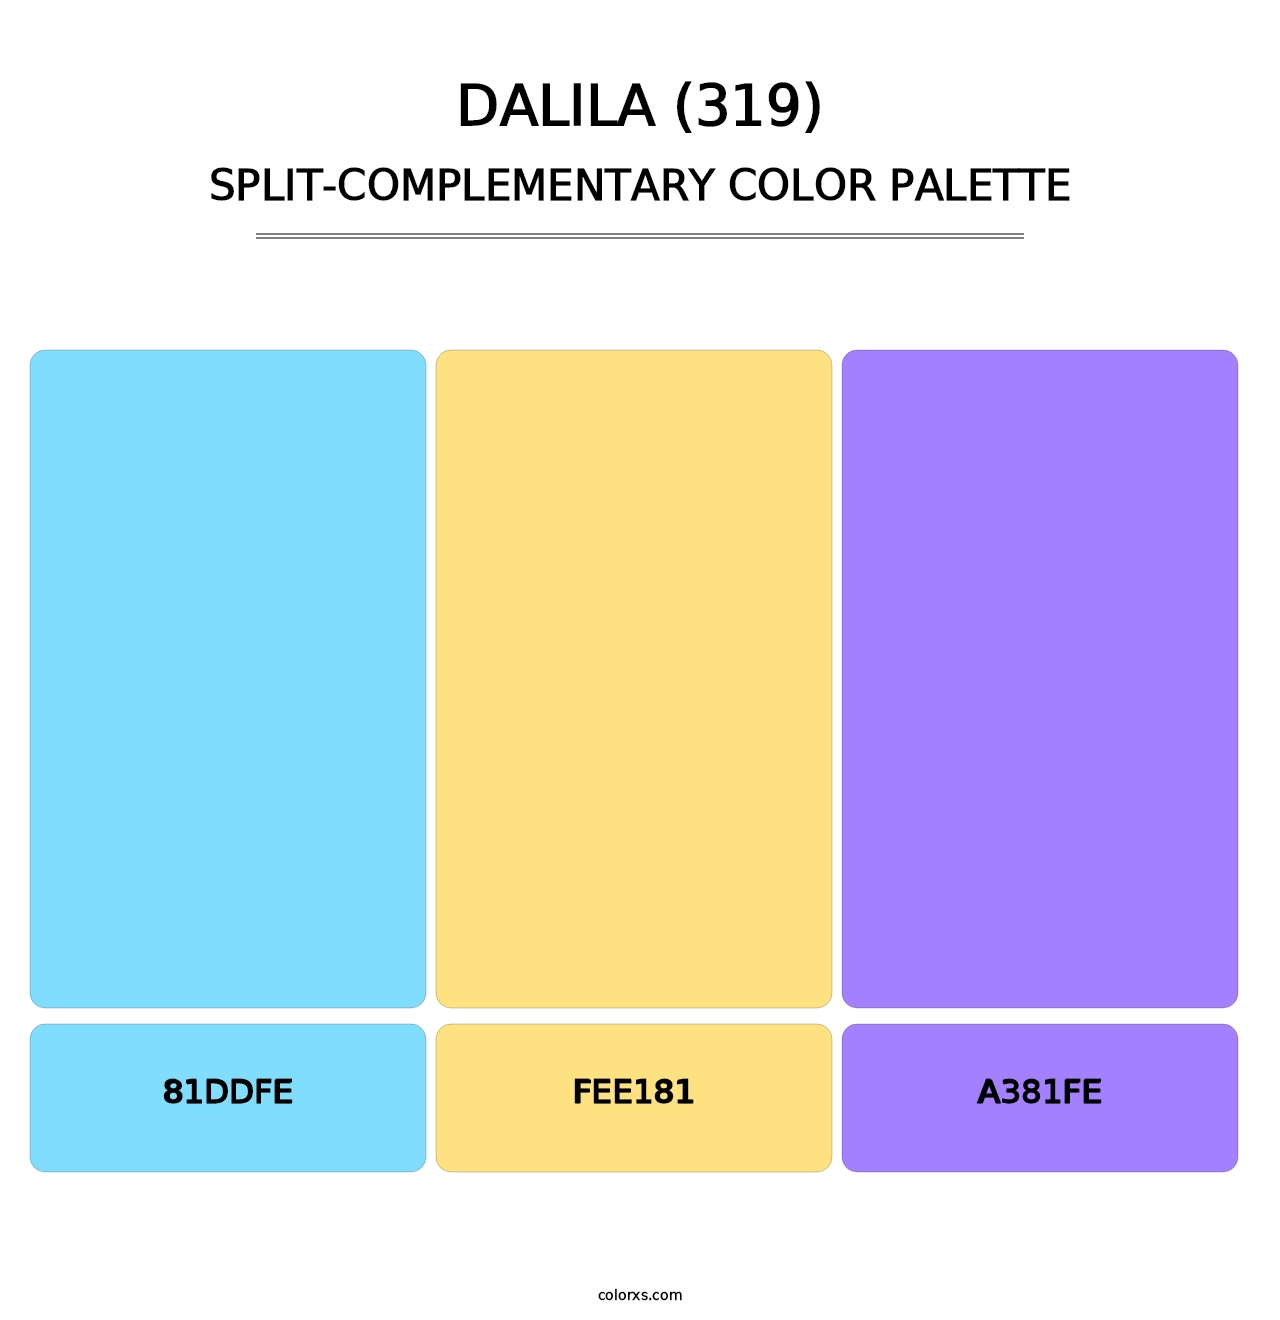 Dalila (319) - Split-Complementary Color Palette